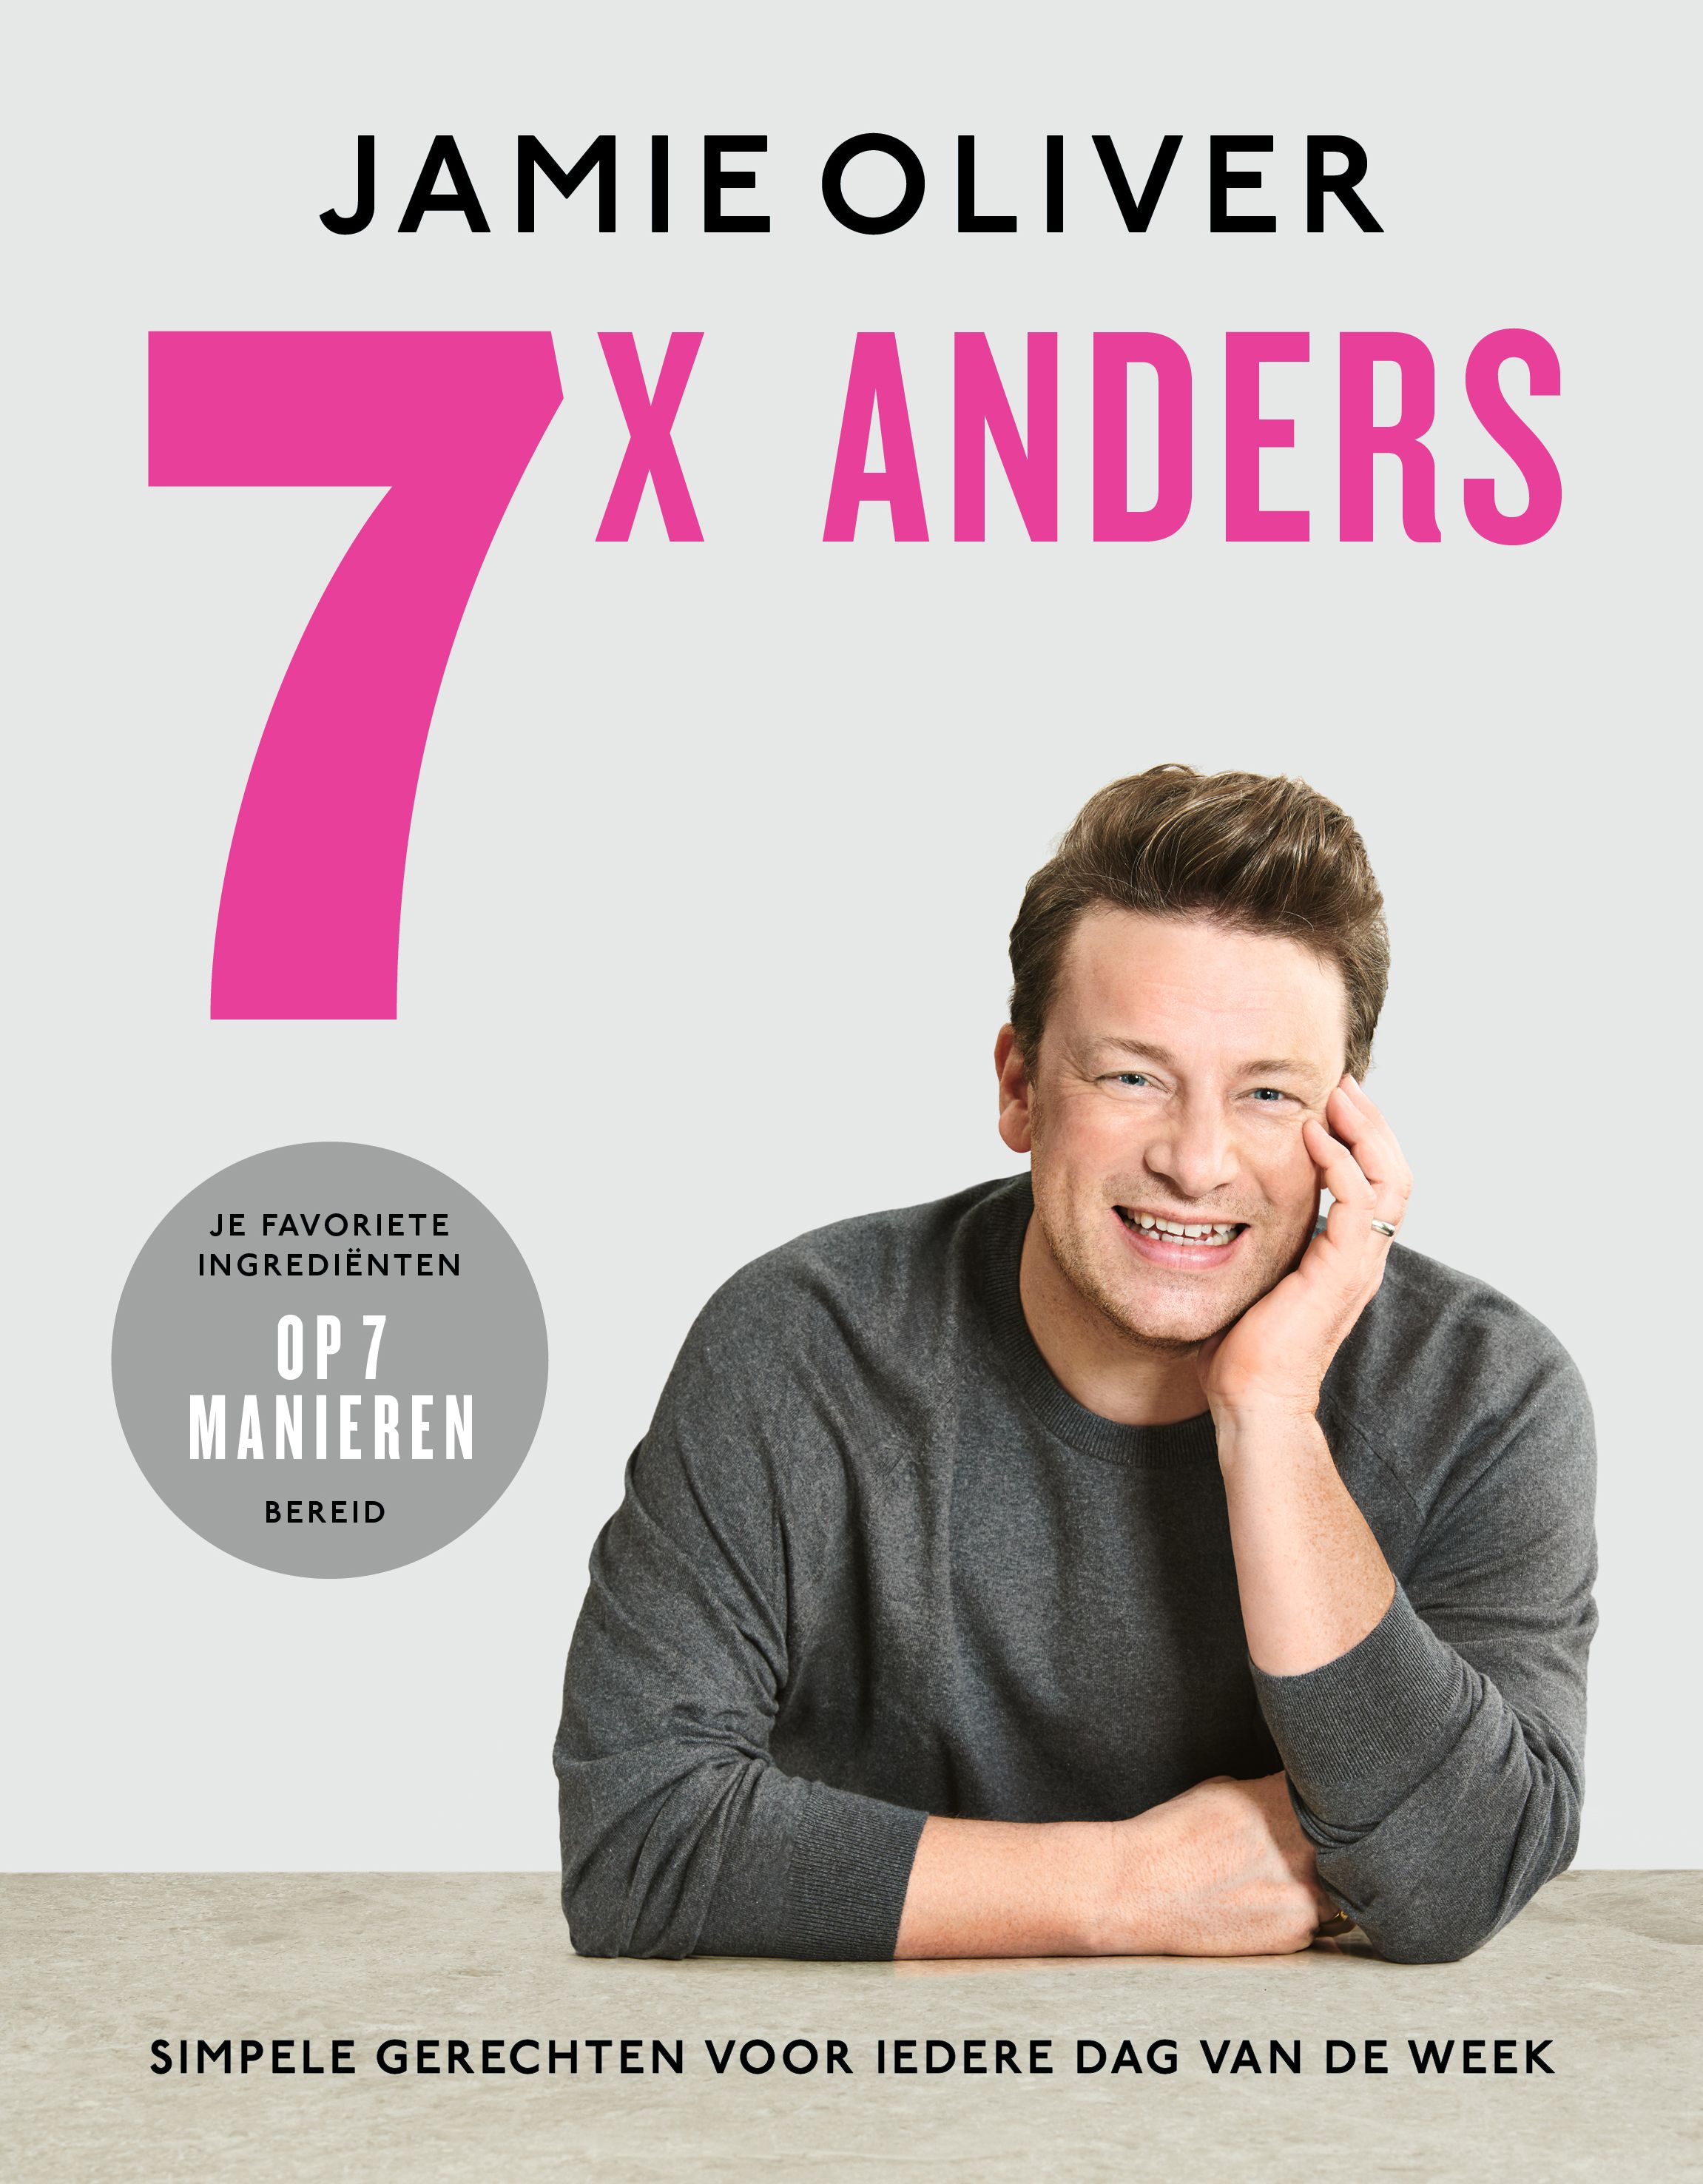 is Jamie Oliver's nieuwste kookboek: 7 anders